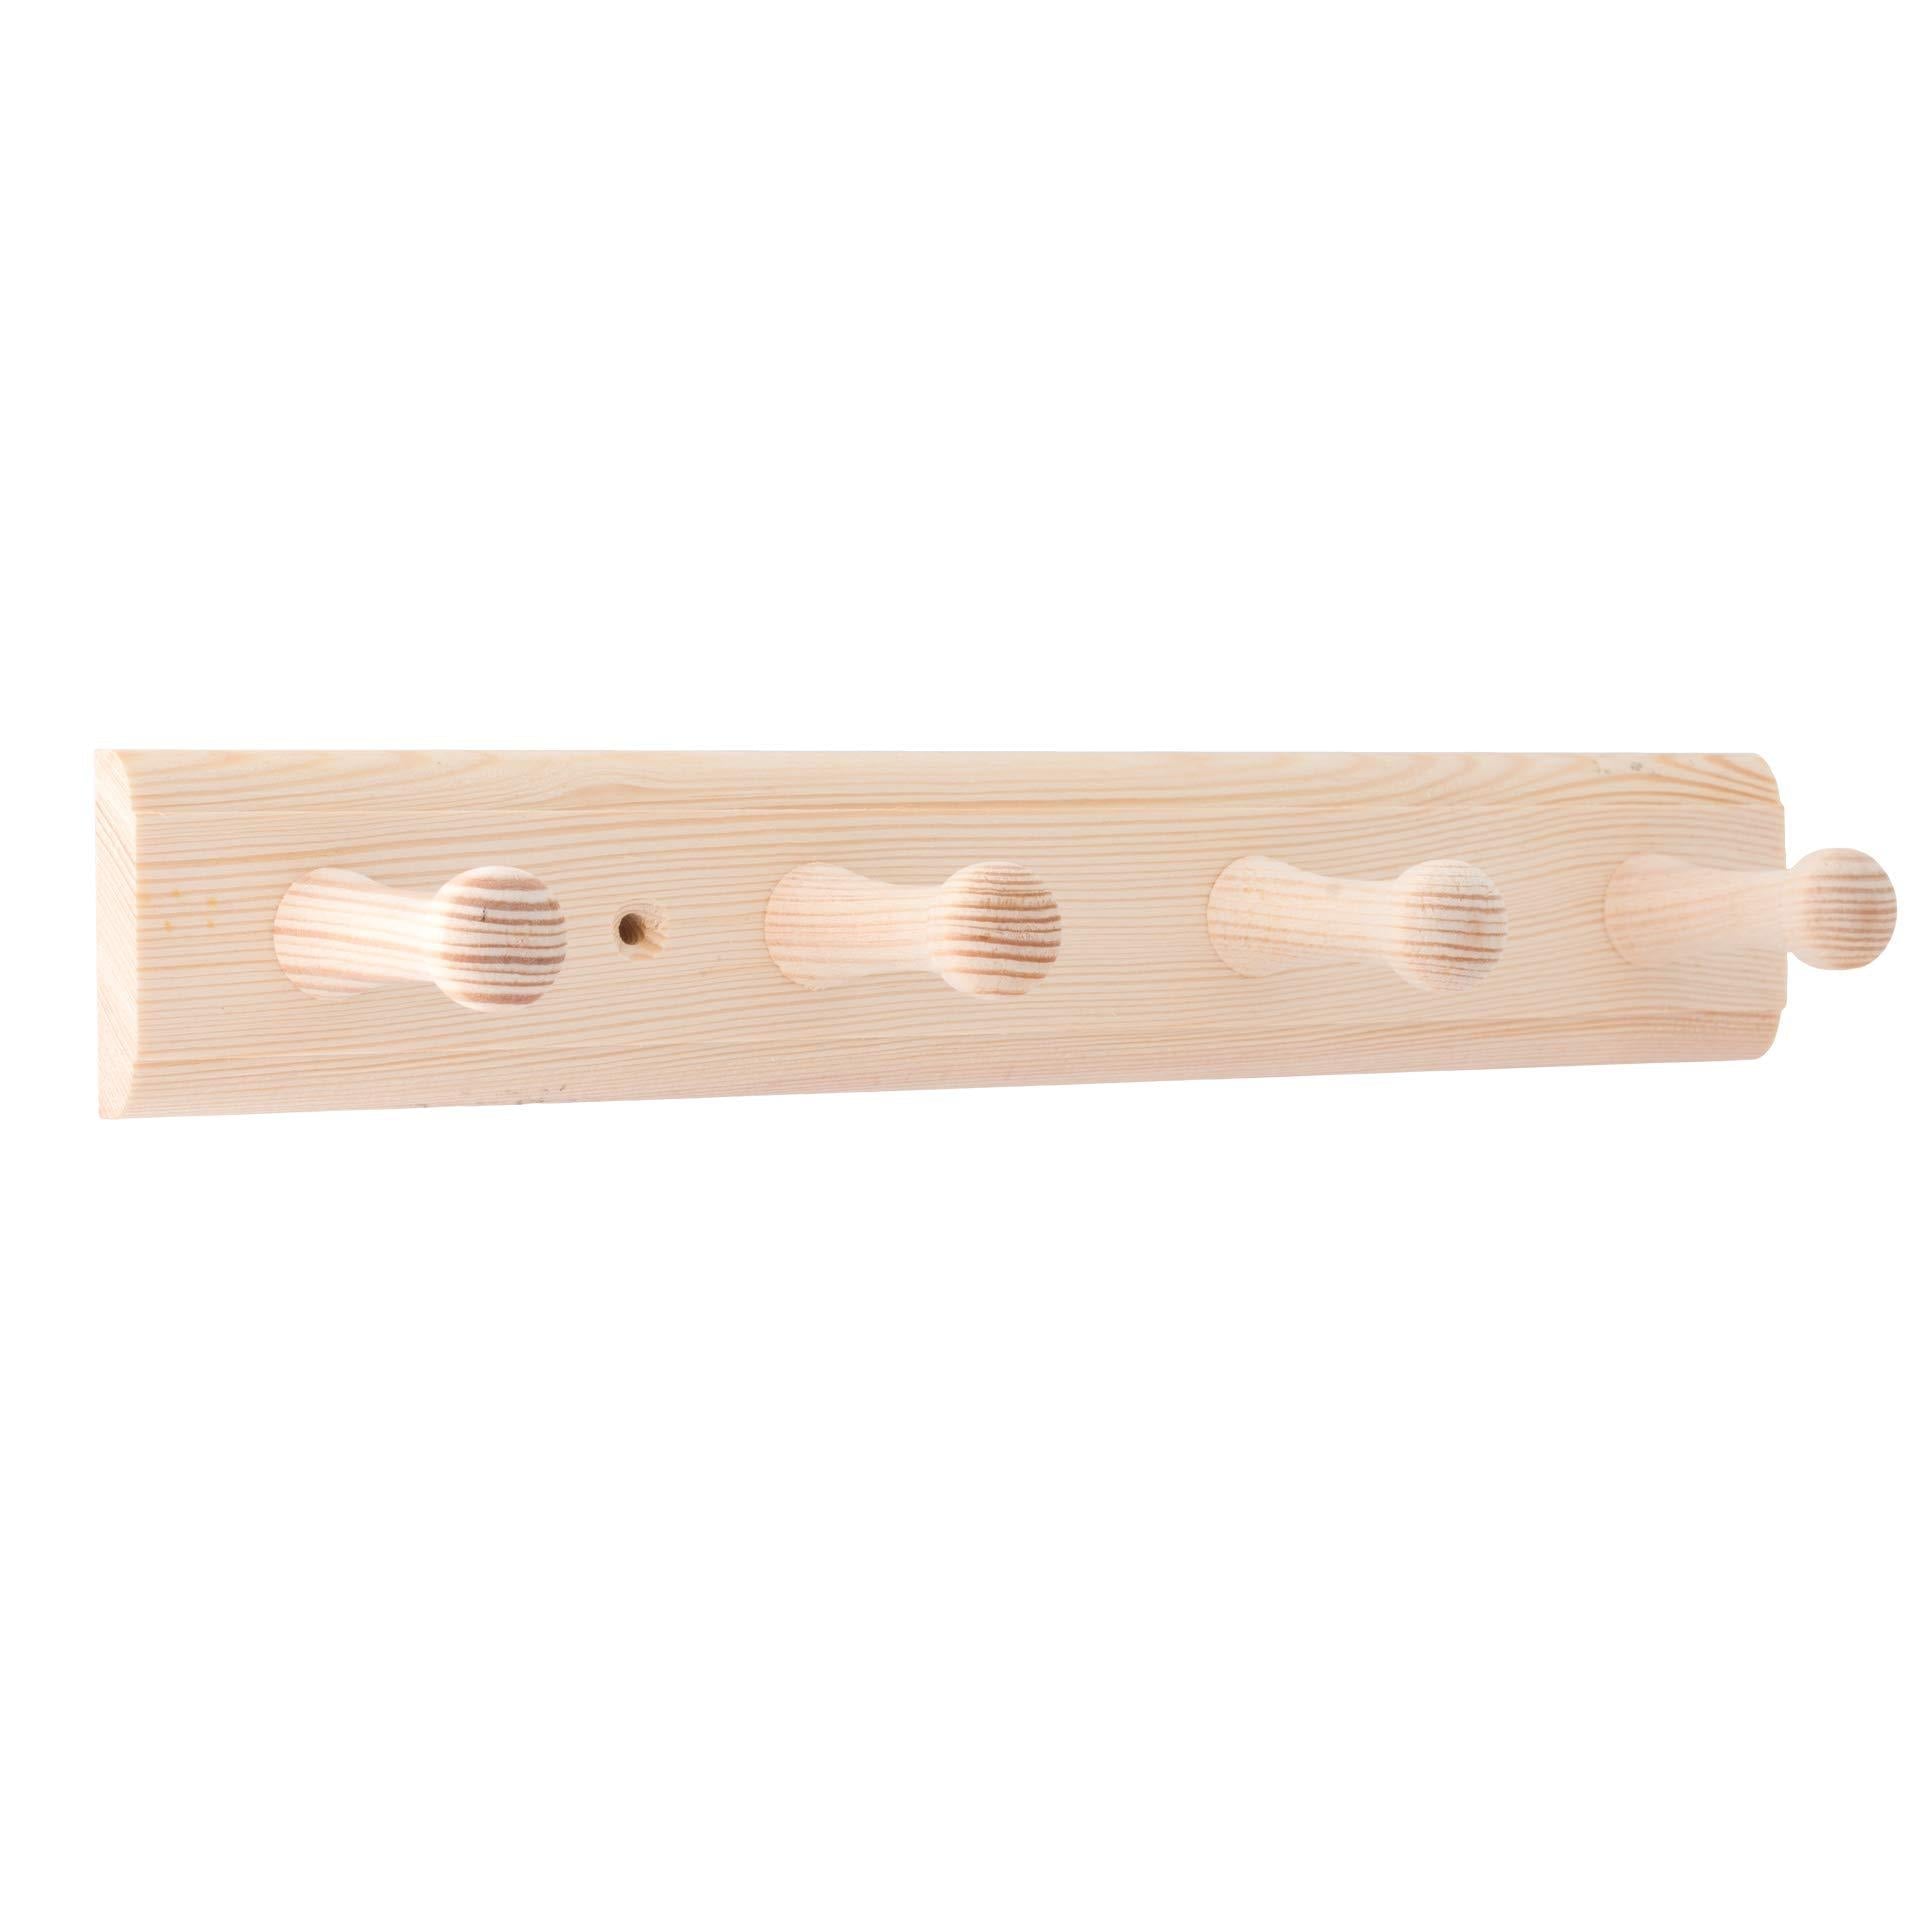 LouMaxx Hakenleiste Holz aus Kiefer mit 4 Holzhaken – Wandgarderobe Holz - Garderobe Kinder - Garderobe Holz - Kleiderhaken Holz zur Wandbefestigung